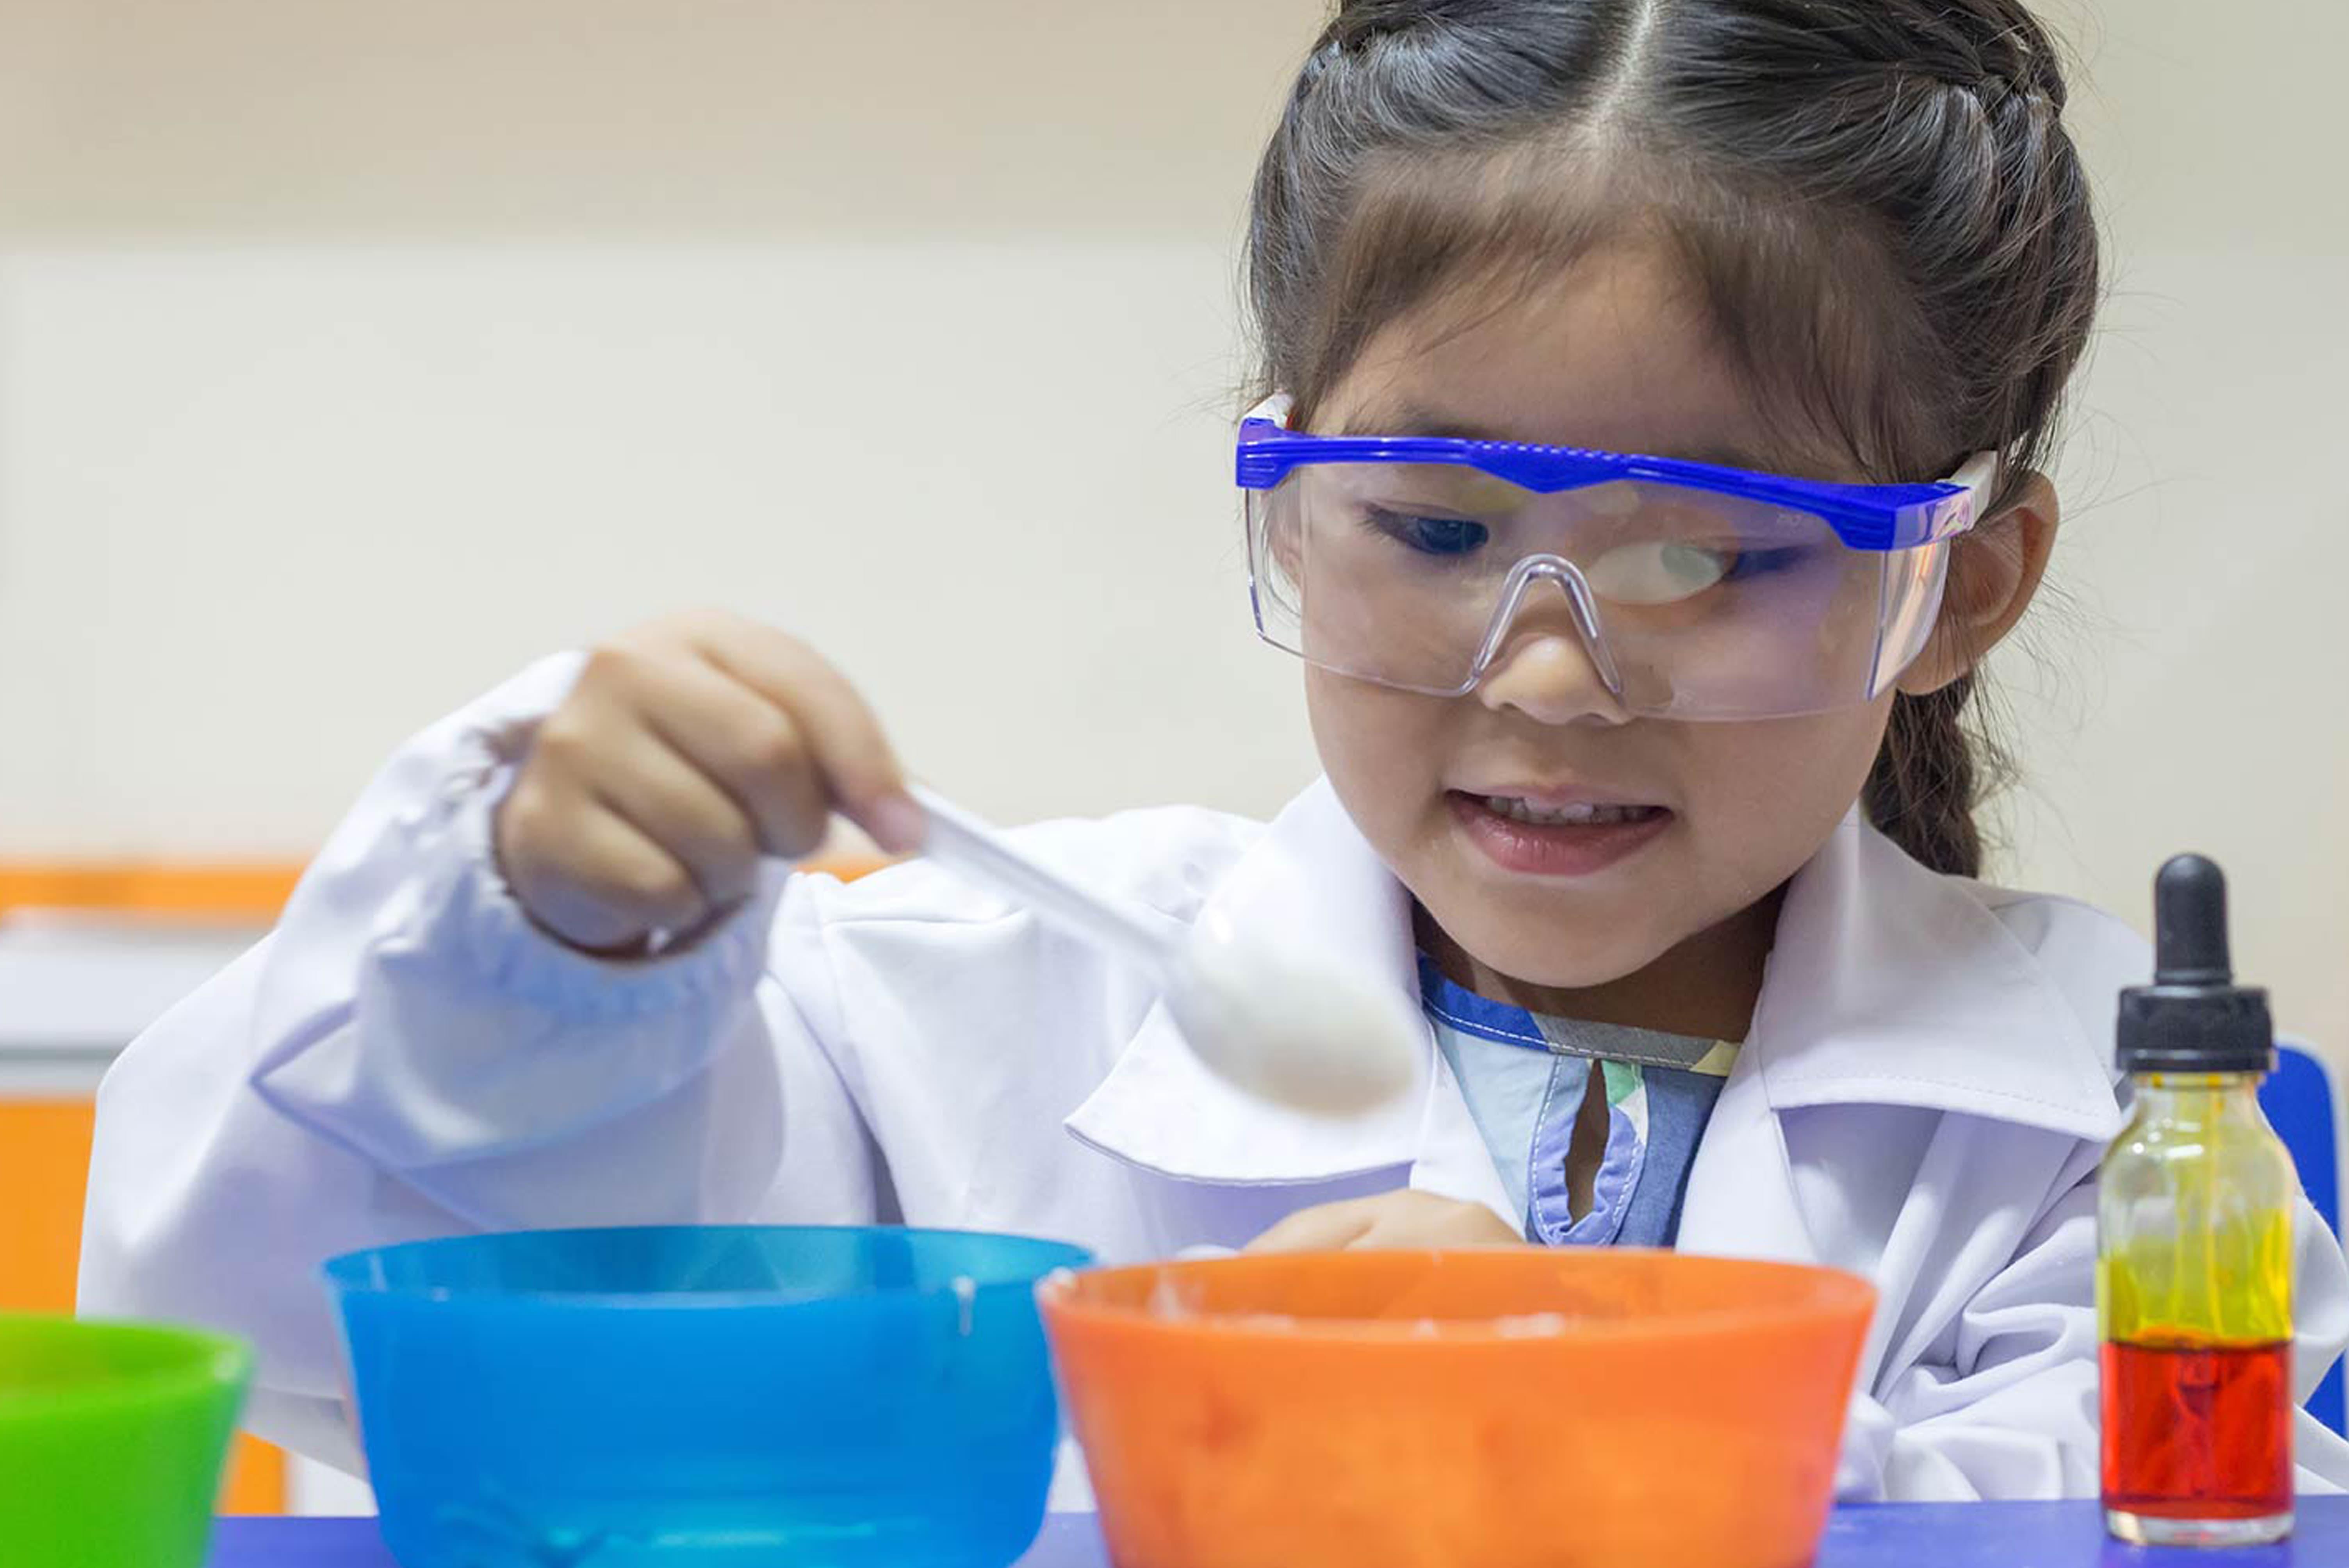 Teaching Science the Montessori Way